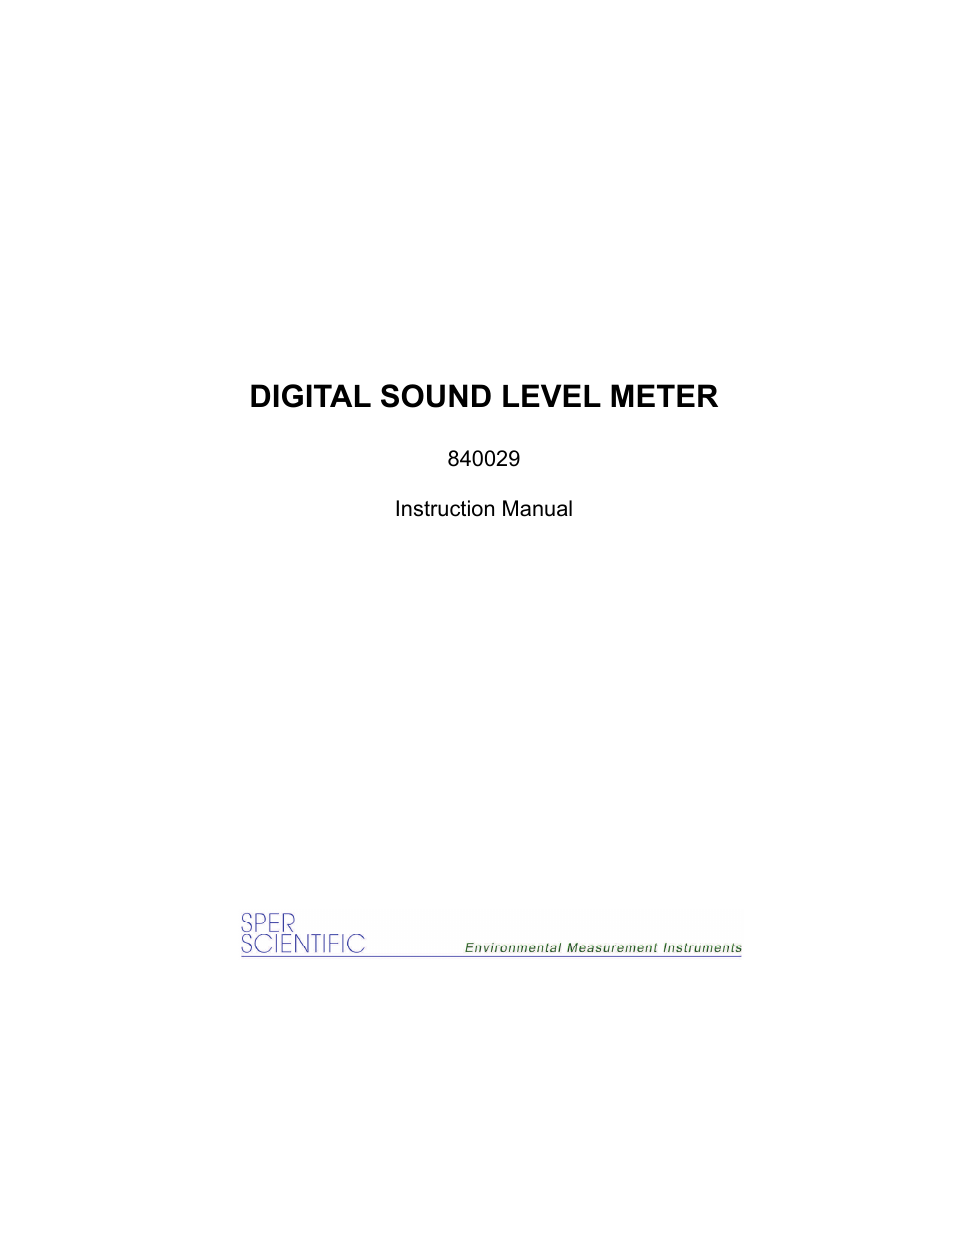 840029 Sound Meter Digital